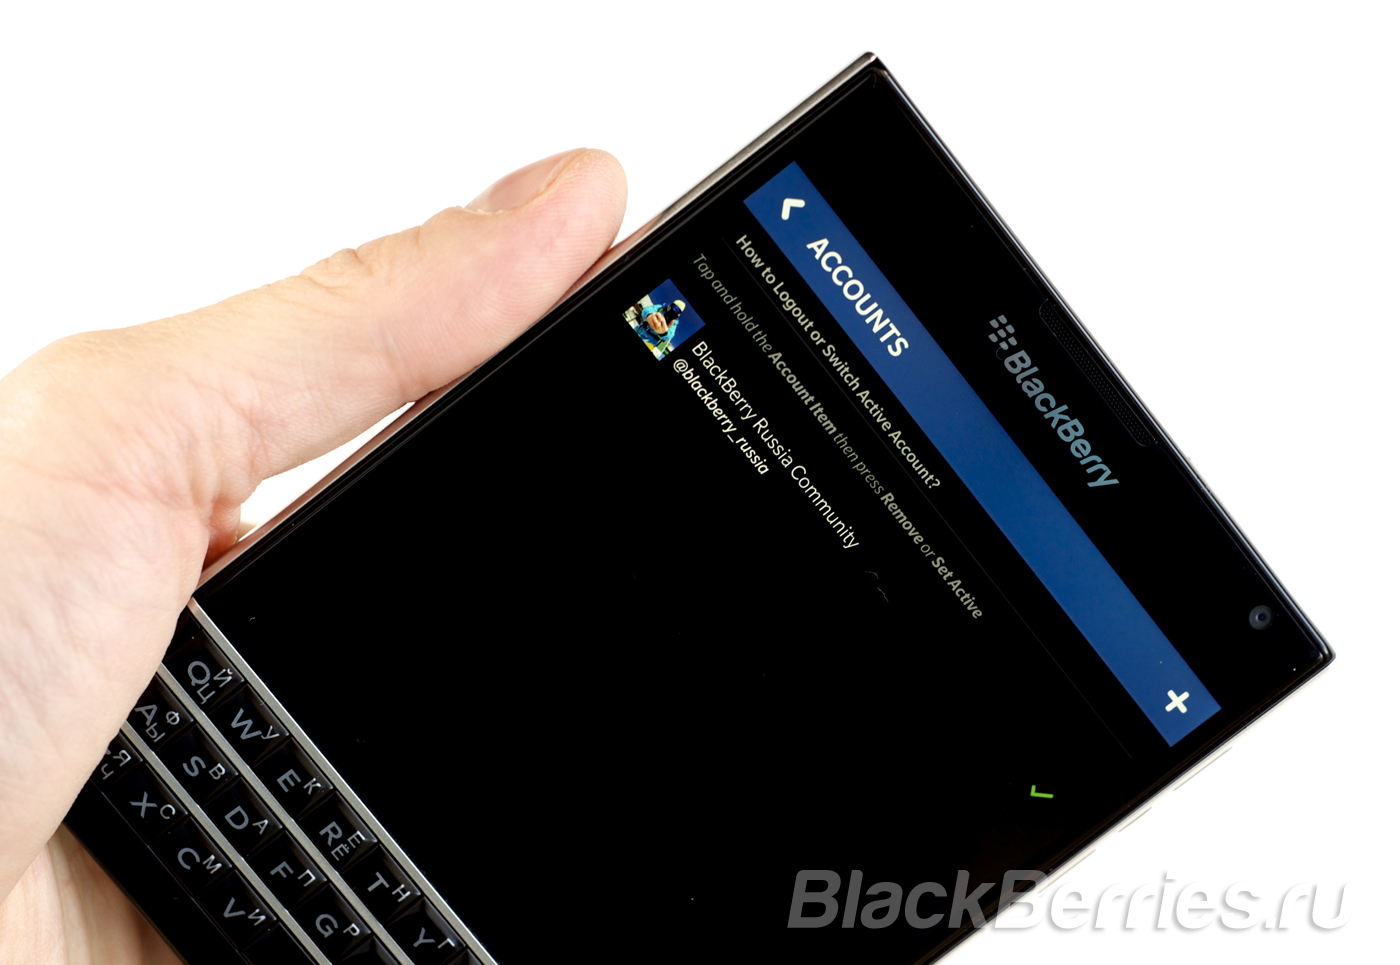 BlackBerry-Passport-Inst10-1-400-1